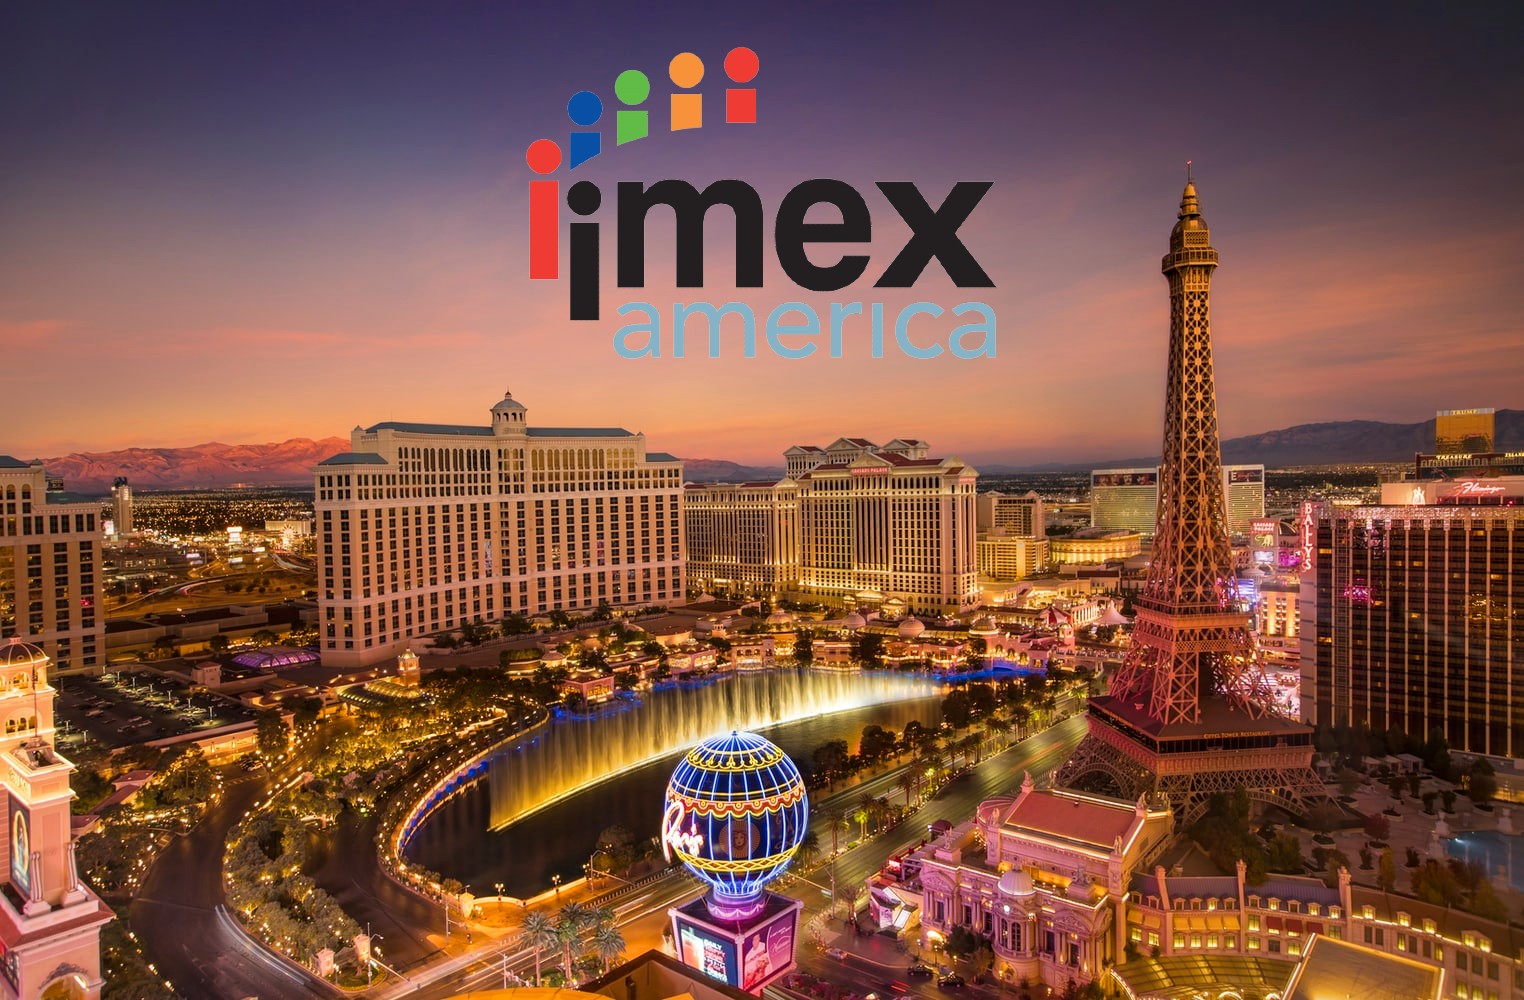 IMEX Americas in Vegas